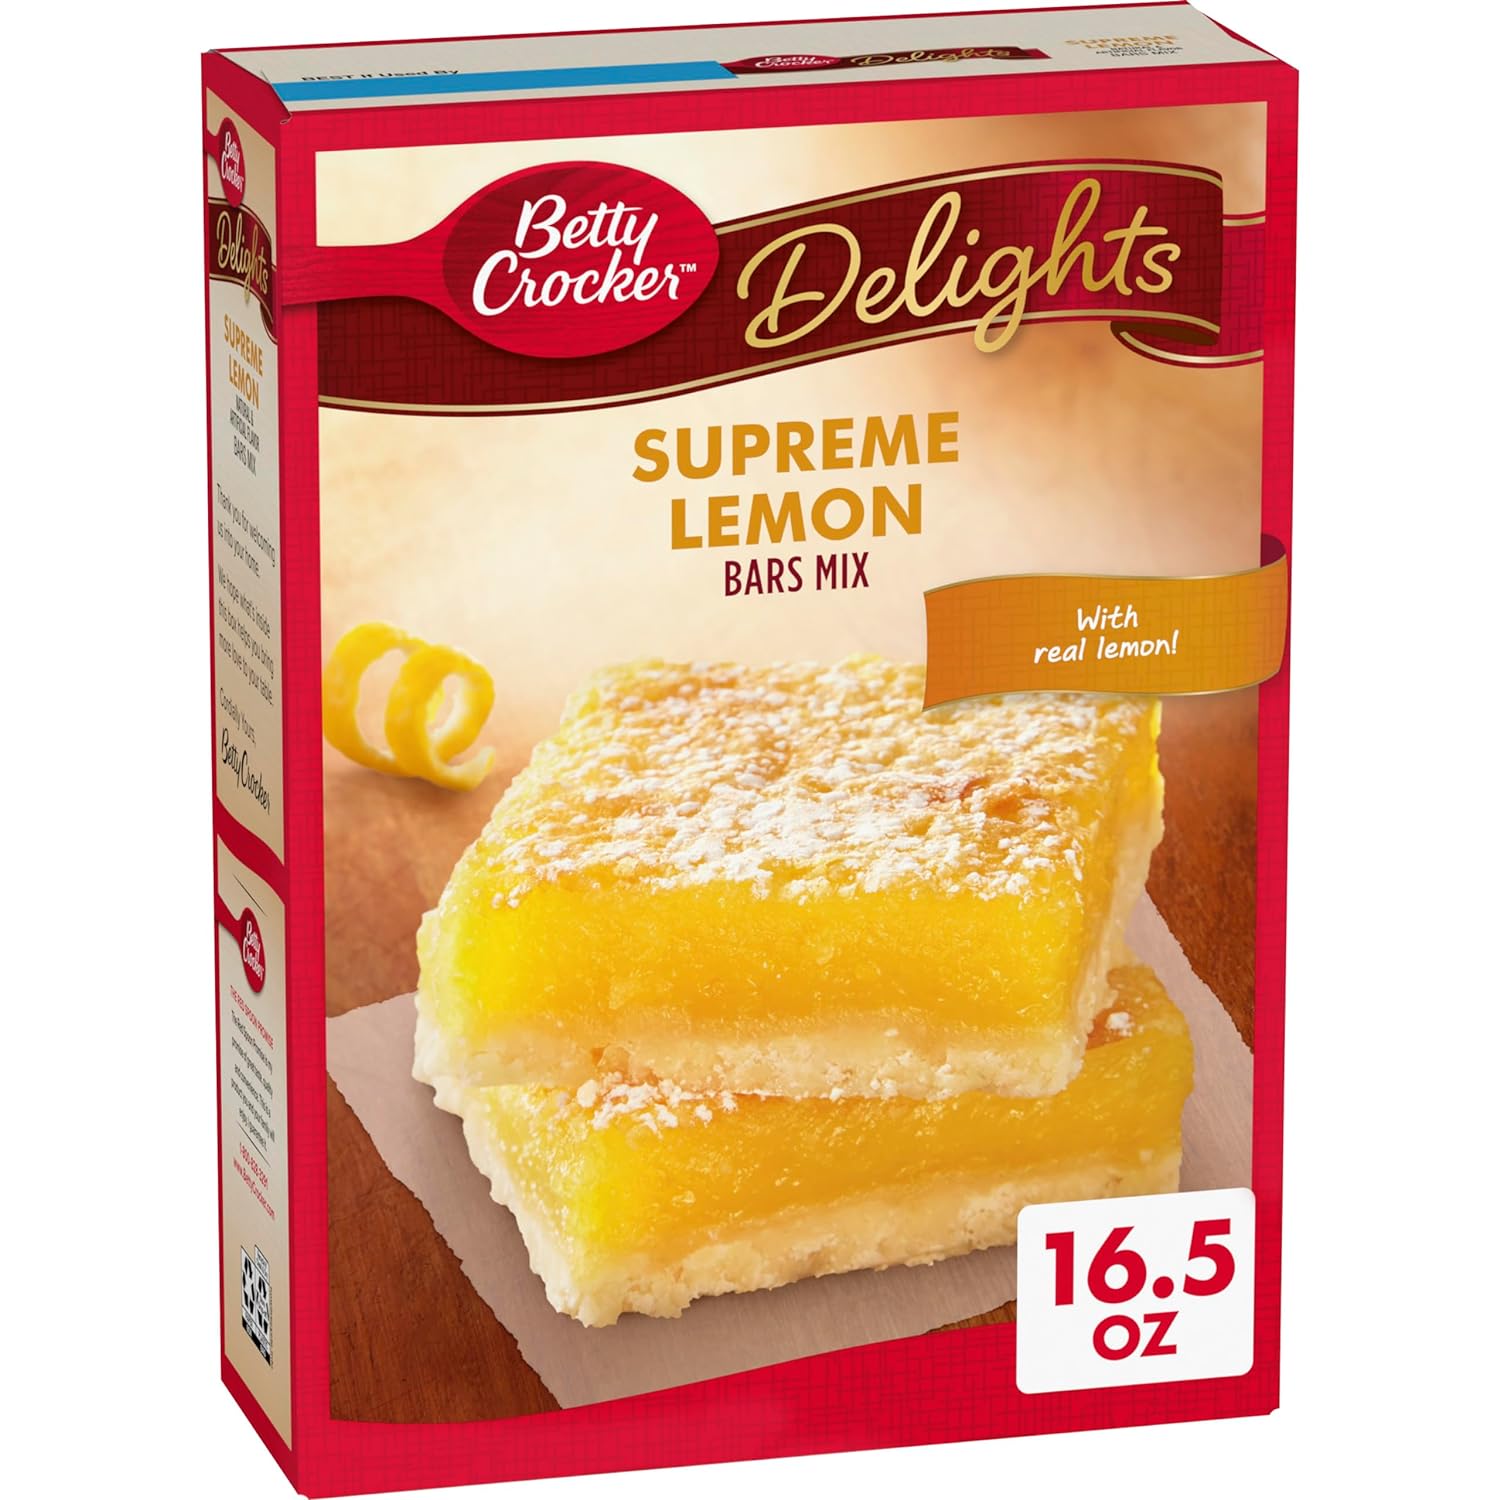 Betty Crocker Delights Supreme Lemon Bars Mix, 16.5 oz. (Pack of 12)